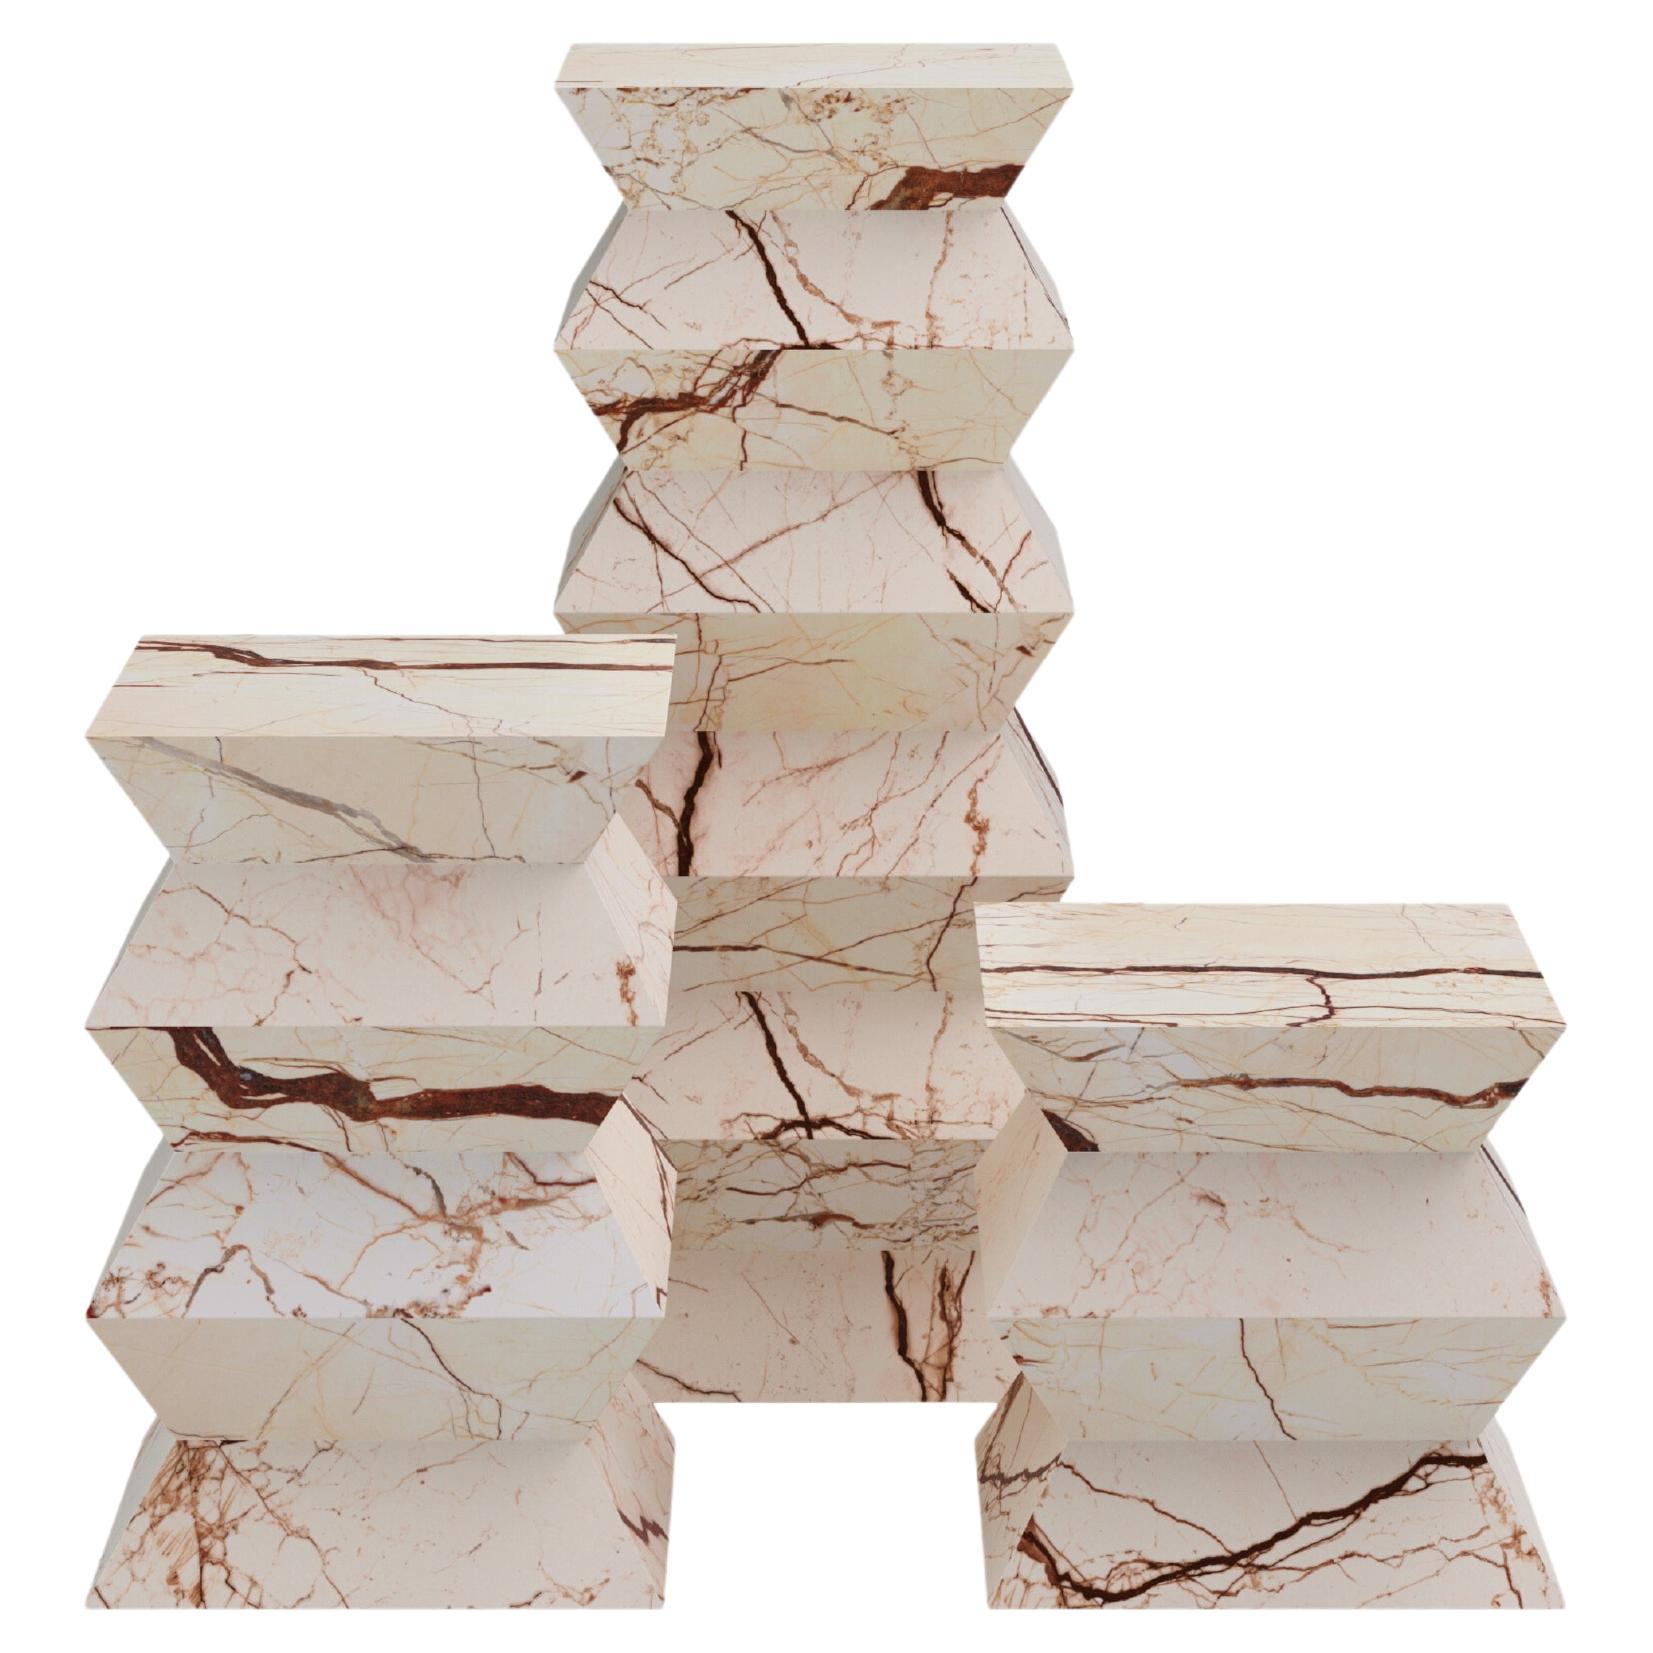 FORM(LA) Grinza Pedestal 16"L x 16"W x 40"H Sofita Beige Marble For Sale